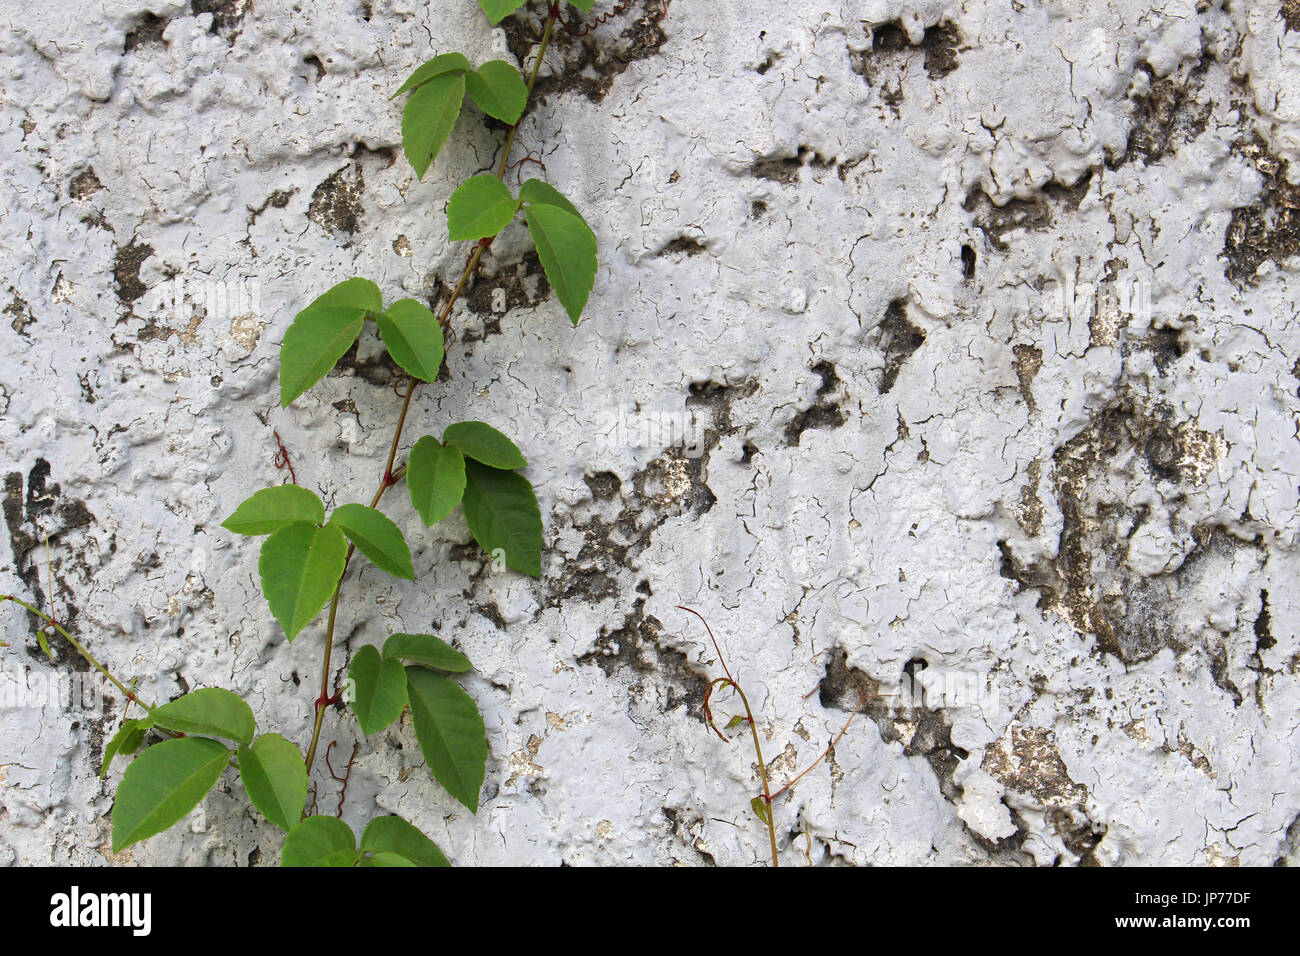 leaf on concrete background Stock Photo